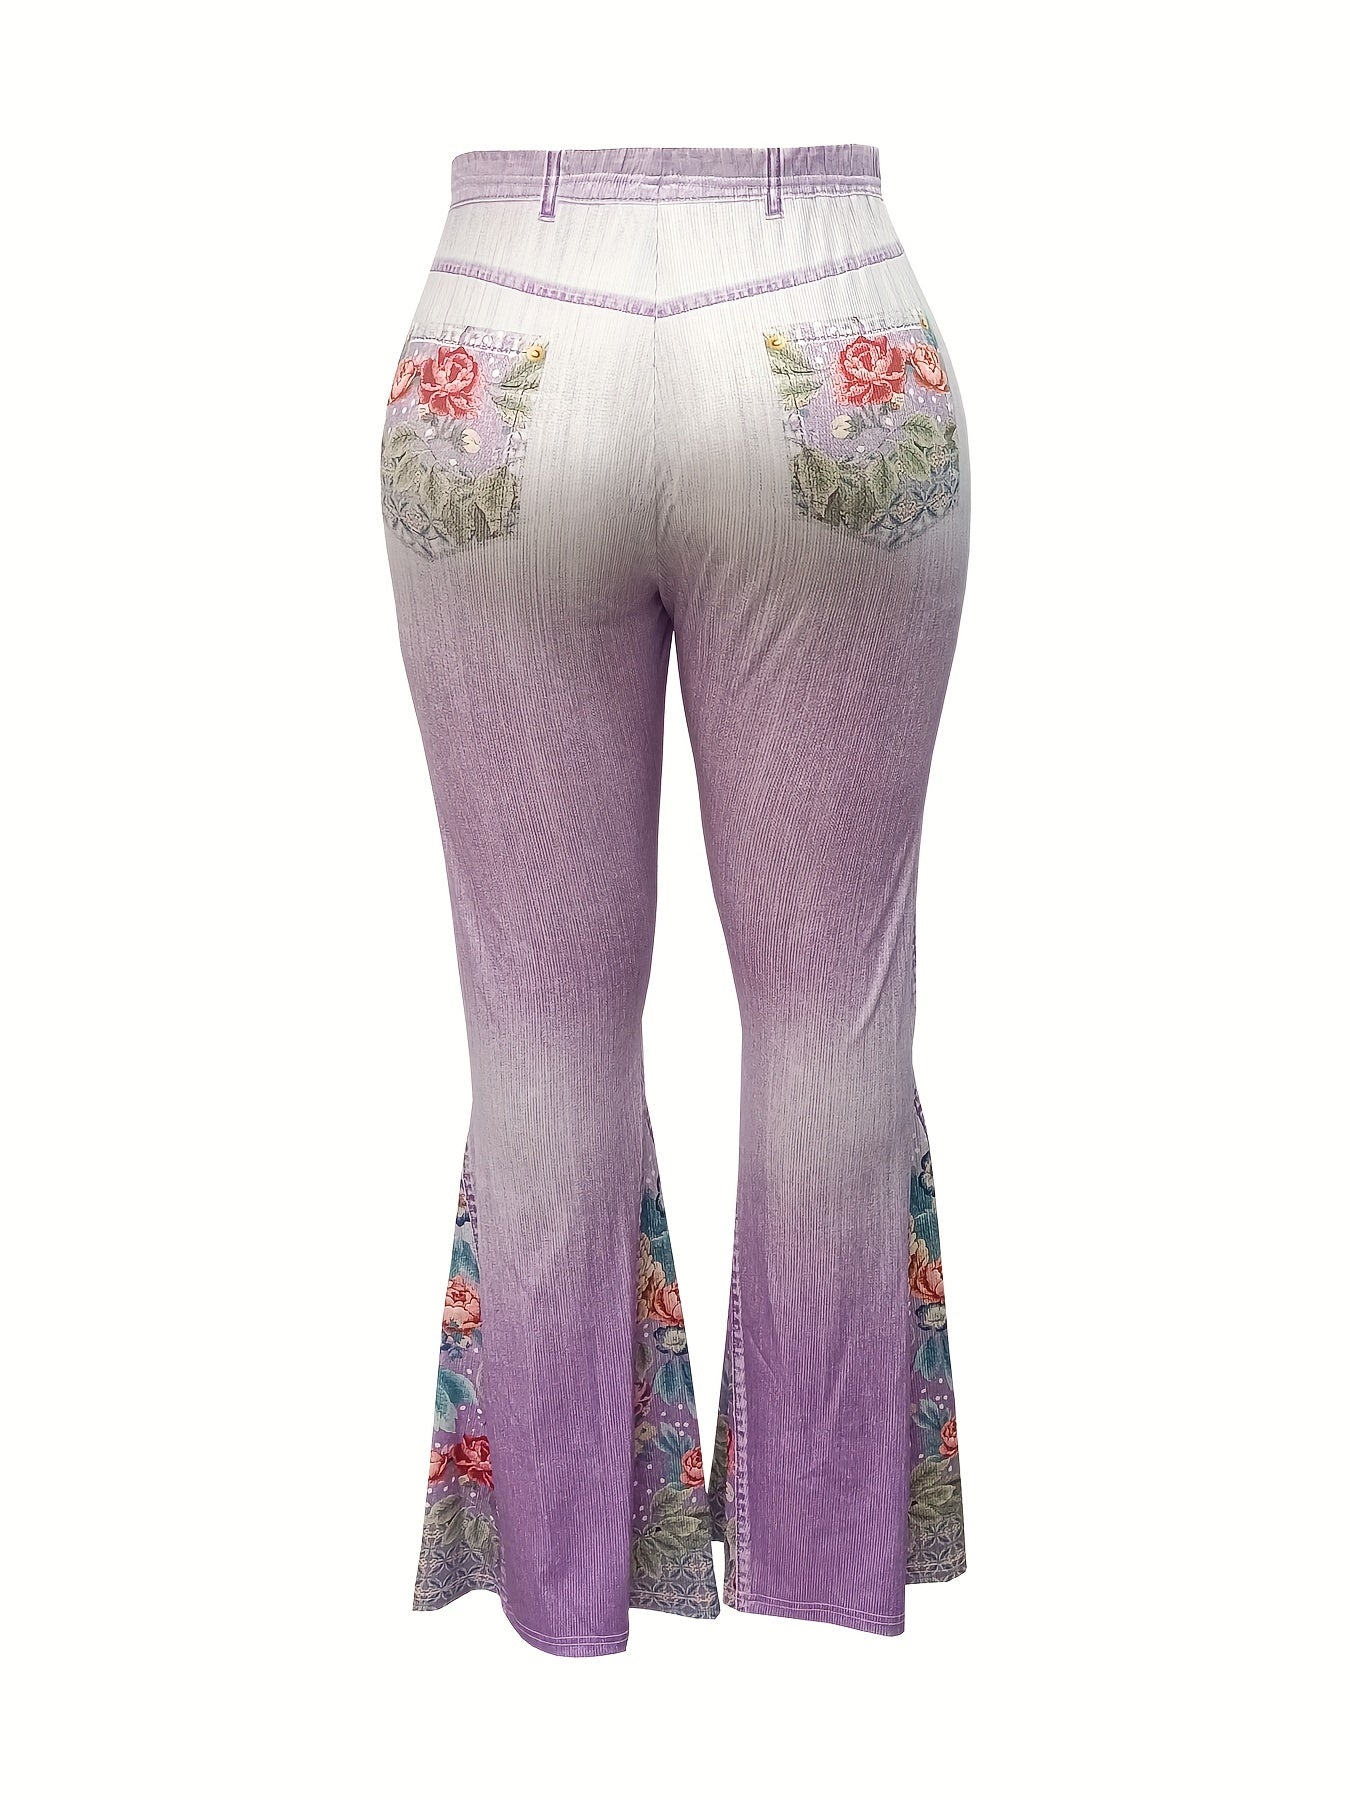 vlovelaw Plus Size Casual Trousers, Women's Plus Denim Print Slight Stretch Contrast Floral Panel Flare Pants